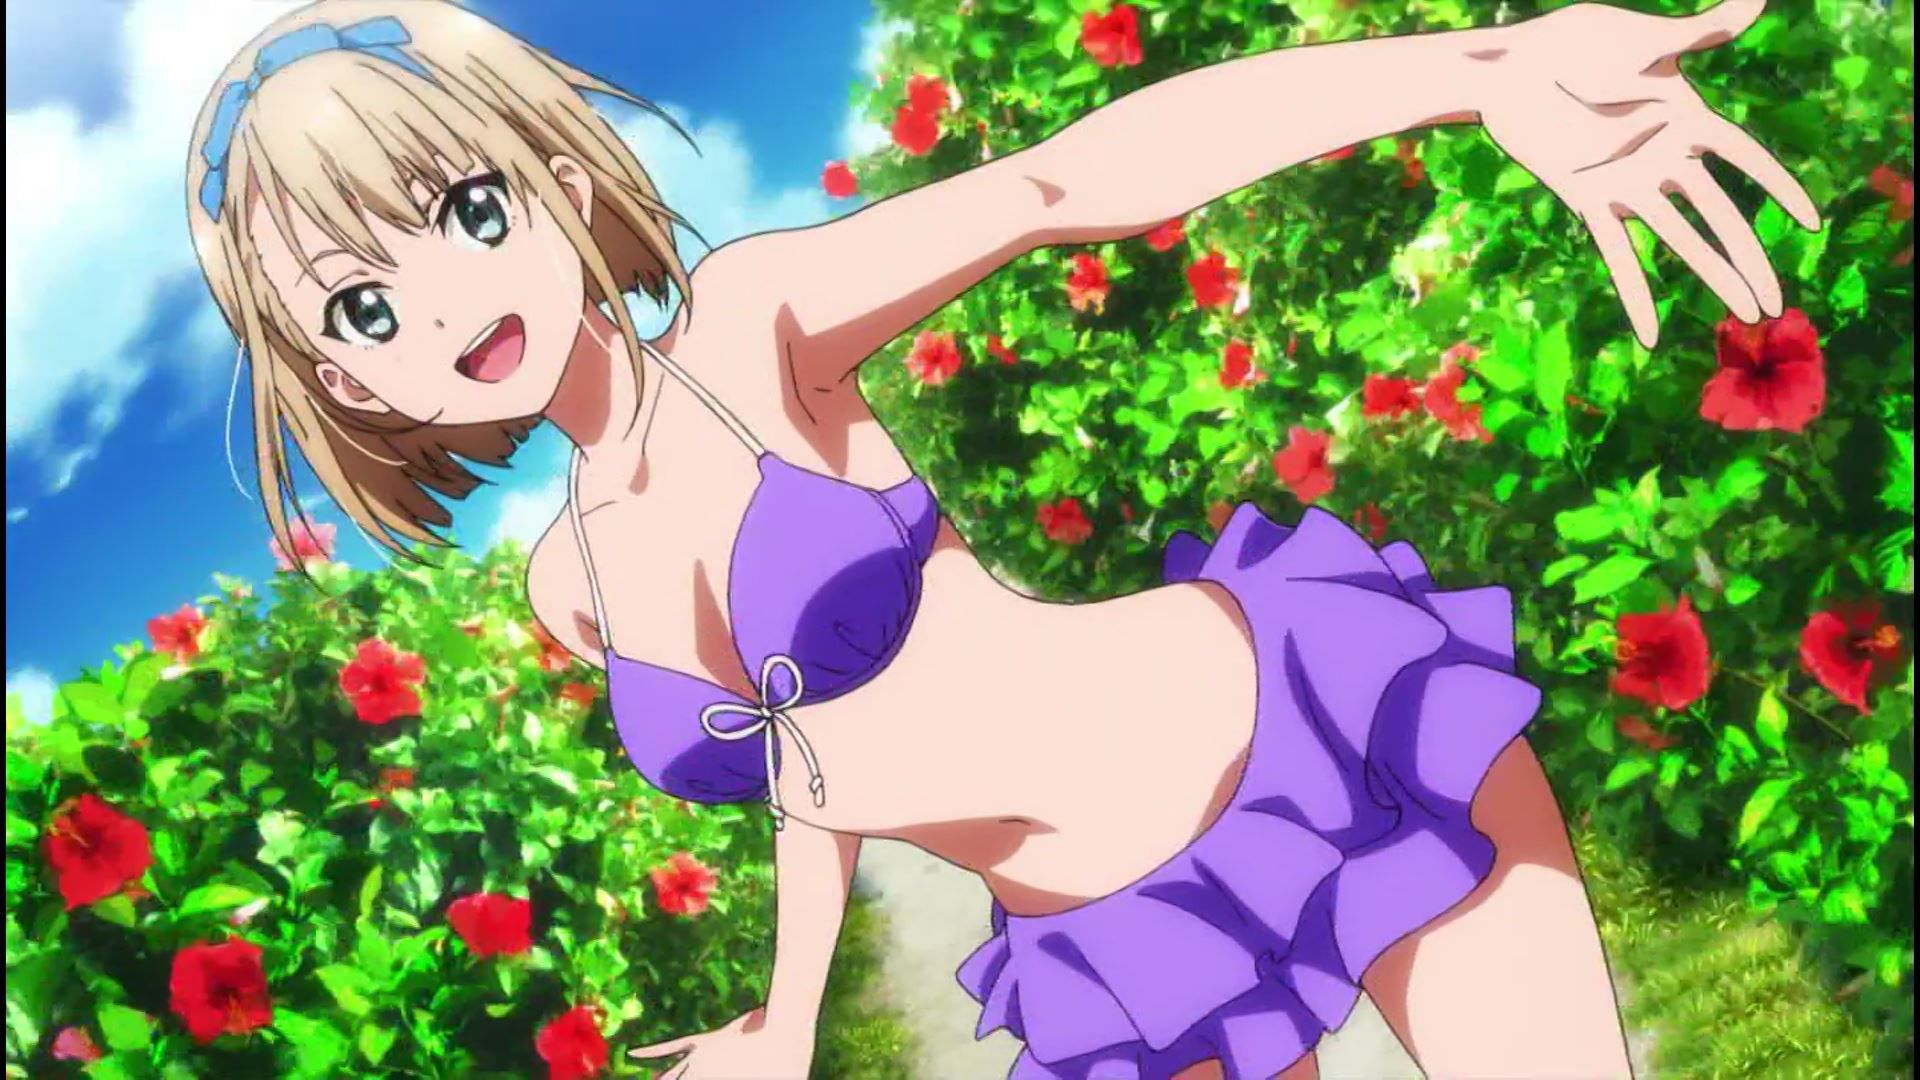 Anime [22/7 (Nanabun Nonijuuni)] 6 episodes erotic scene of girls erotic swimsuit! 18